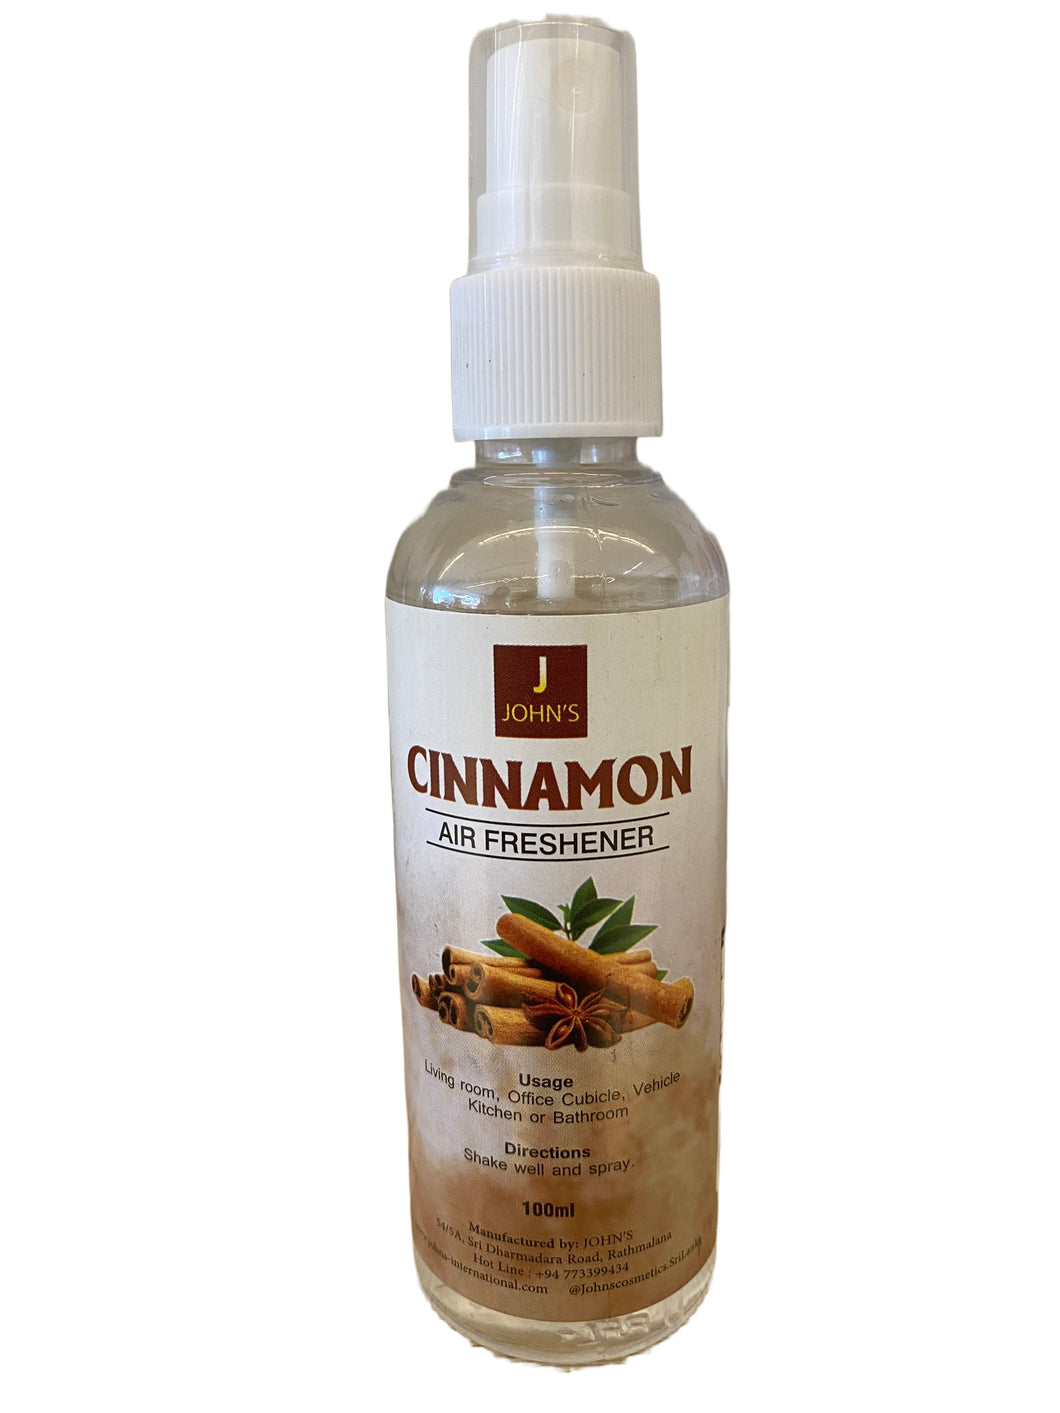 Cinnamon Essential Oil Air Freshener 100ml- John’s